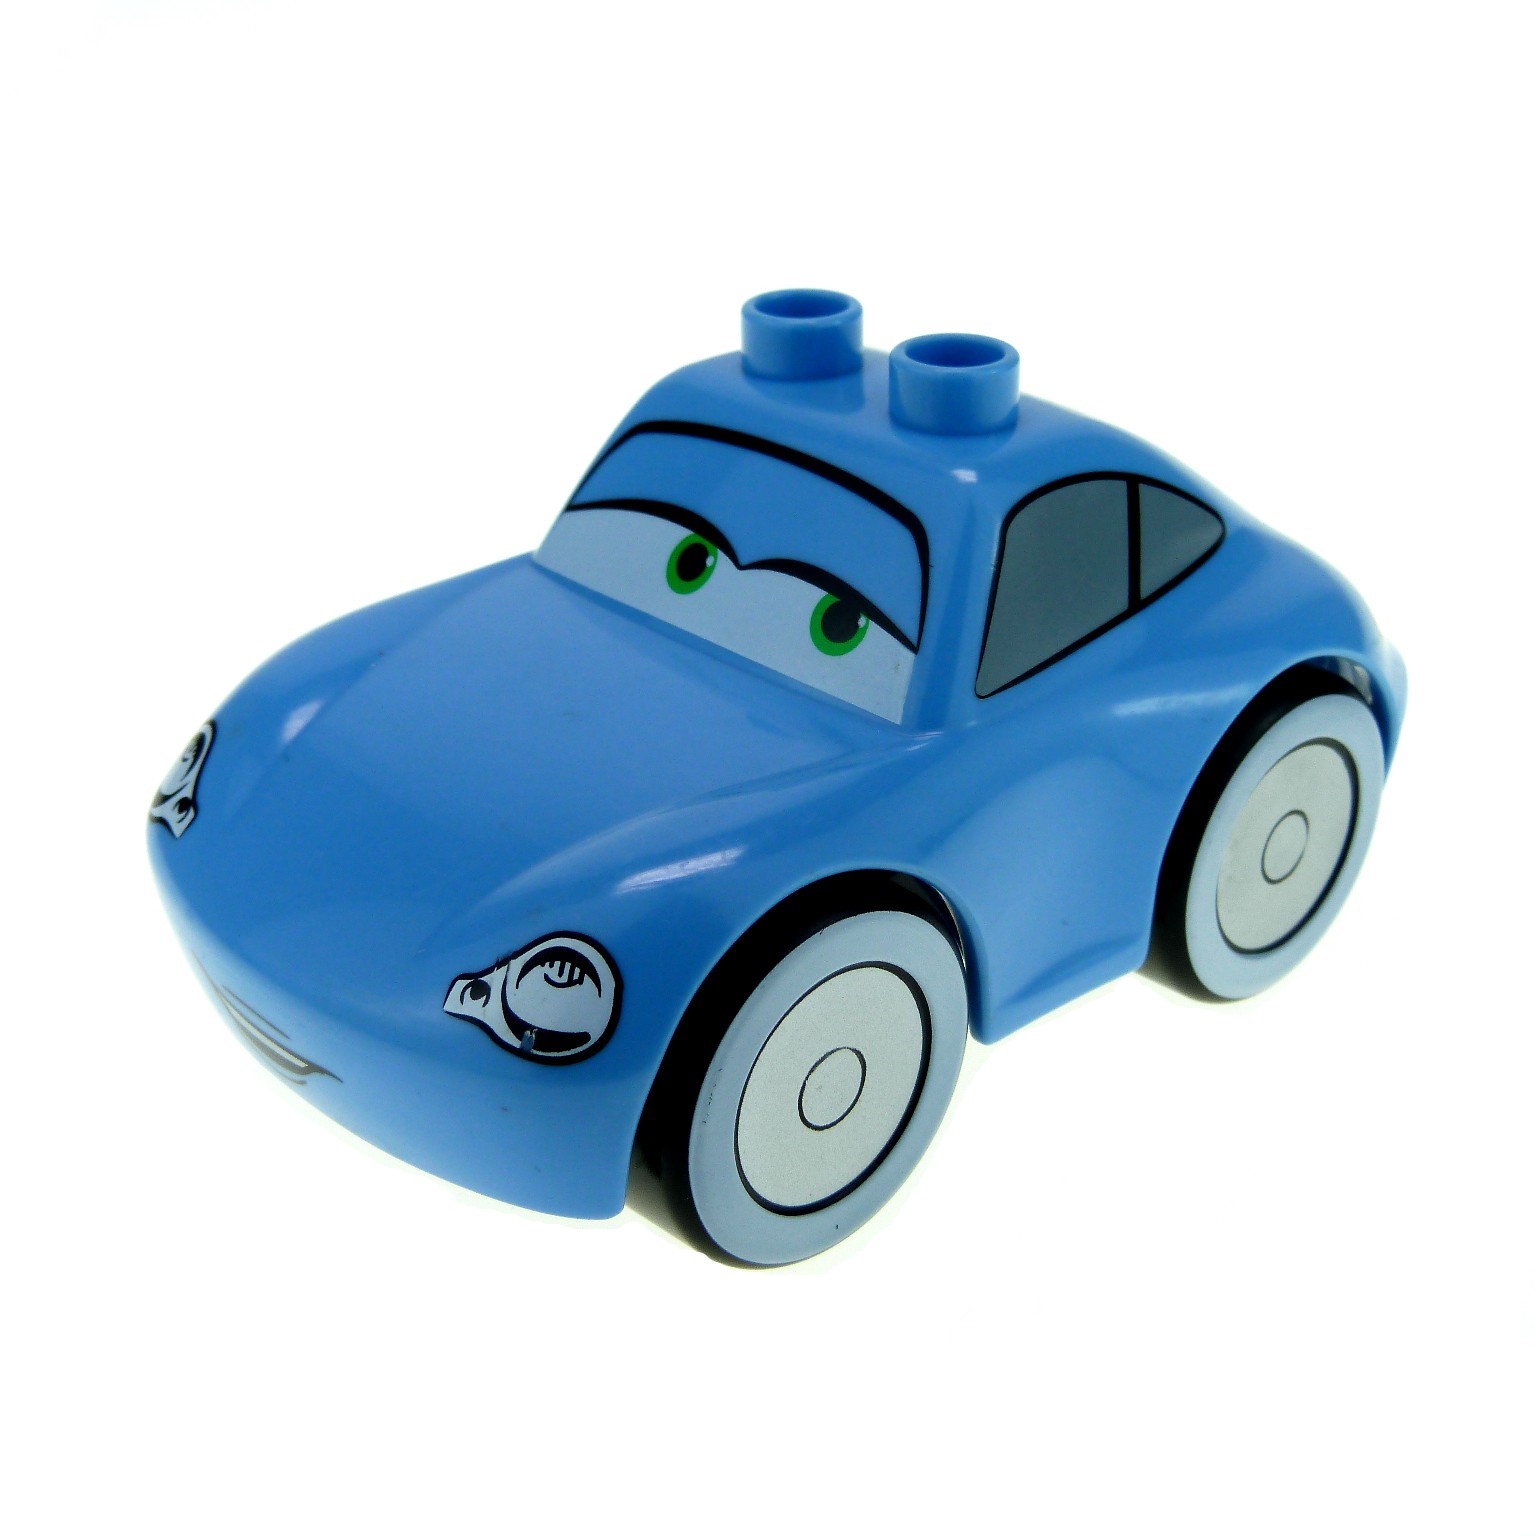 1 x Lego Duplo Fahrzeug Disney Pixar Cars Auto Figur Sally hell blau Porsche Car 